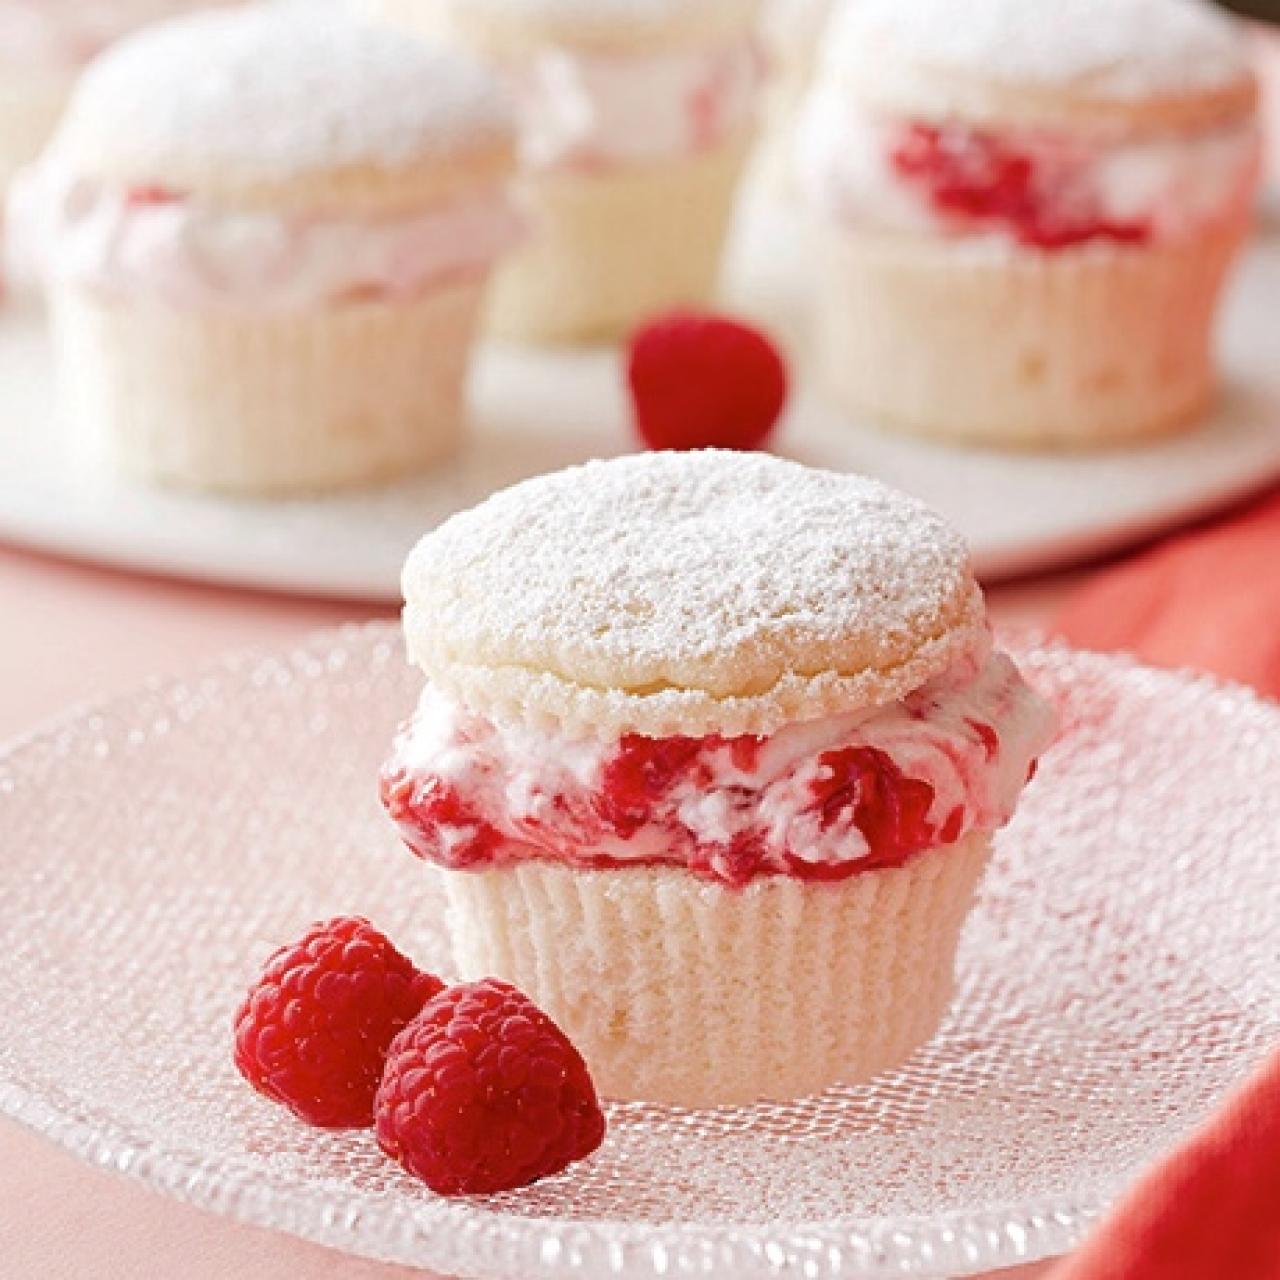 https://food.fnr.sndimg.com/content/dam/images/food/fullset/2013/6/19/0/CCEDI706_raspberry-cream-cupcakes-recipe_s4x3.jpg.rend.hgtvcom.1280.1280.suffix/1382543756574.jpeg